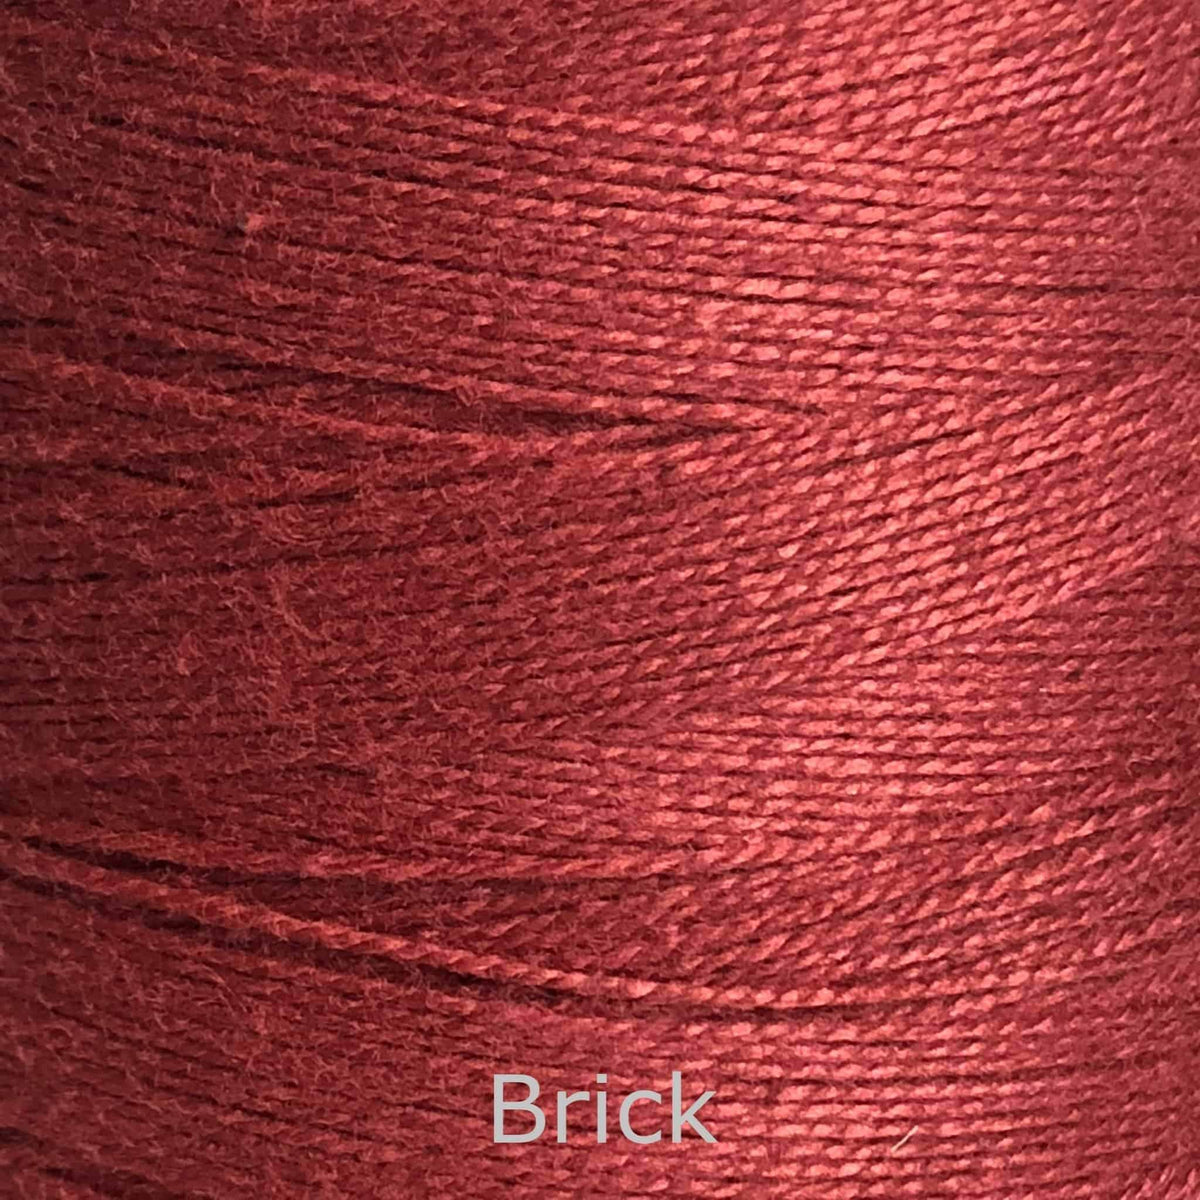 16/2 cotton weaving yarn brick